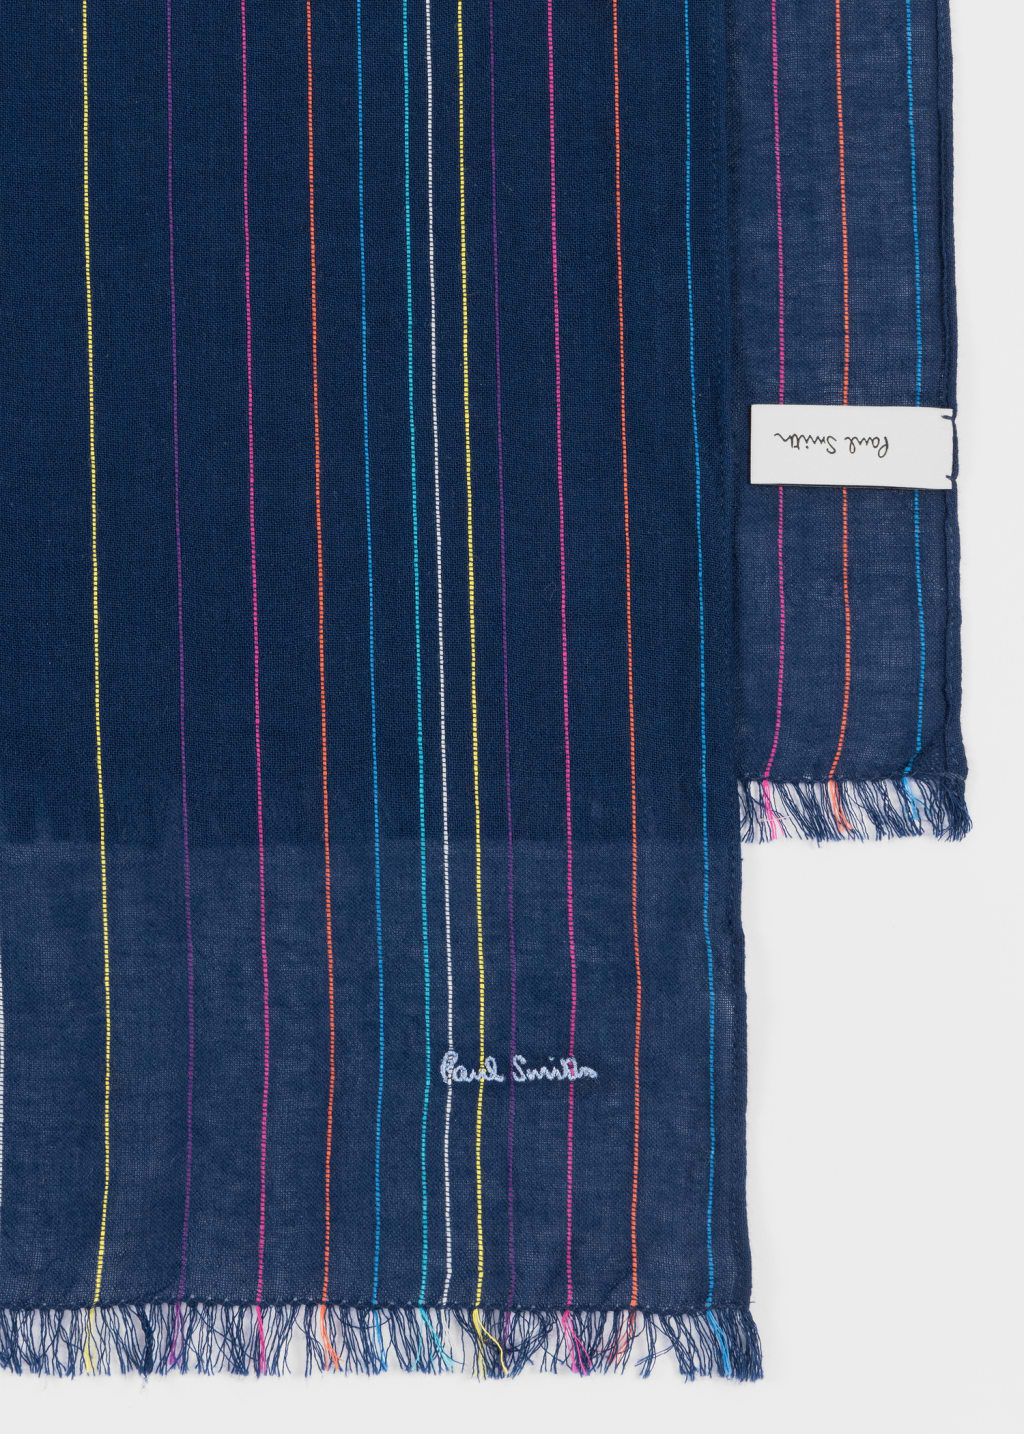 Detail View - Navy Stitch Stripe Cotton Scarf Paul Smith